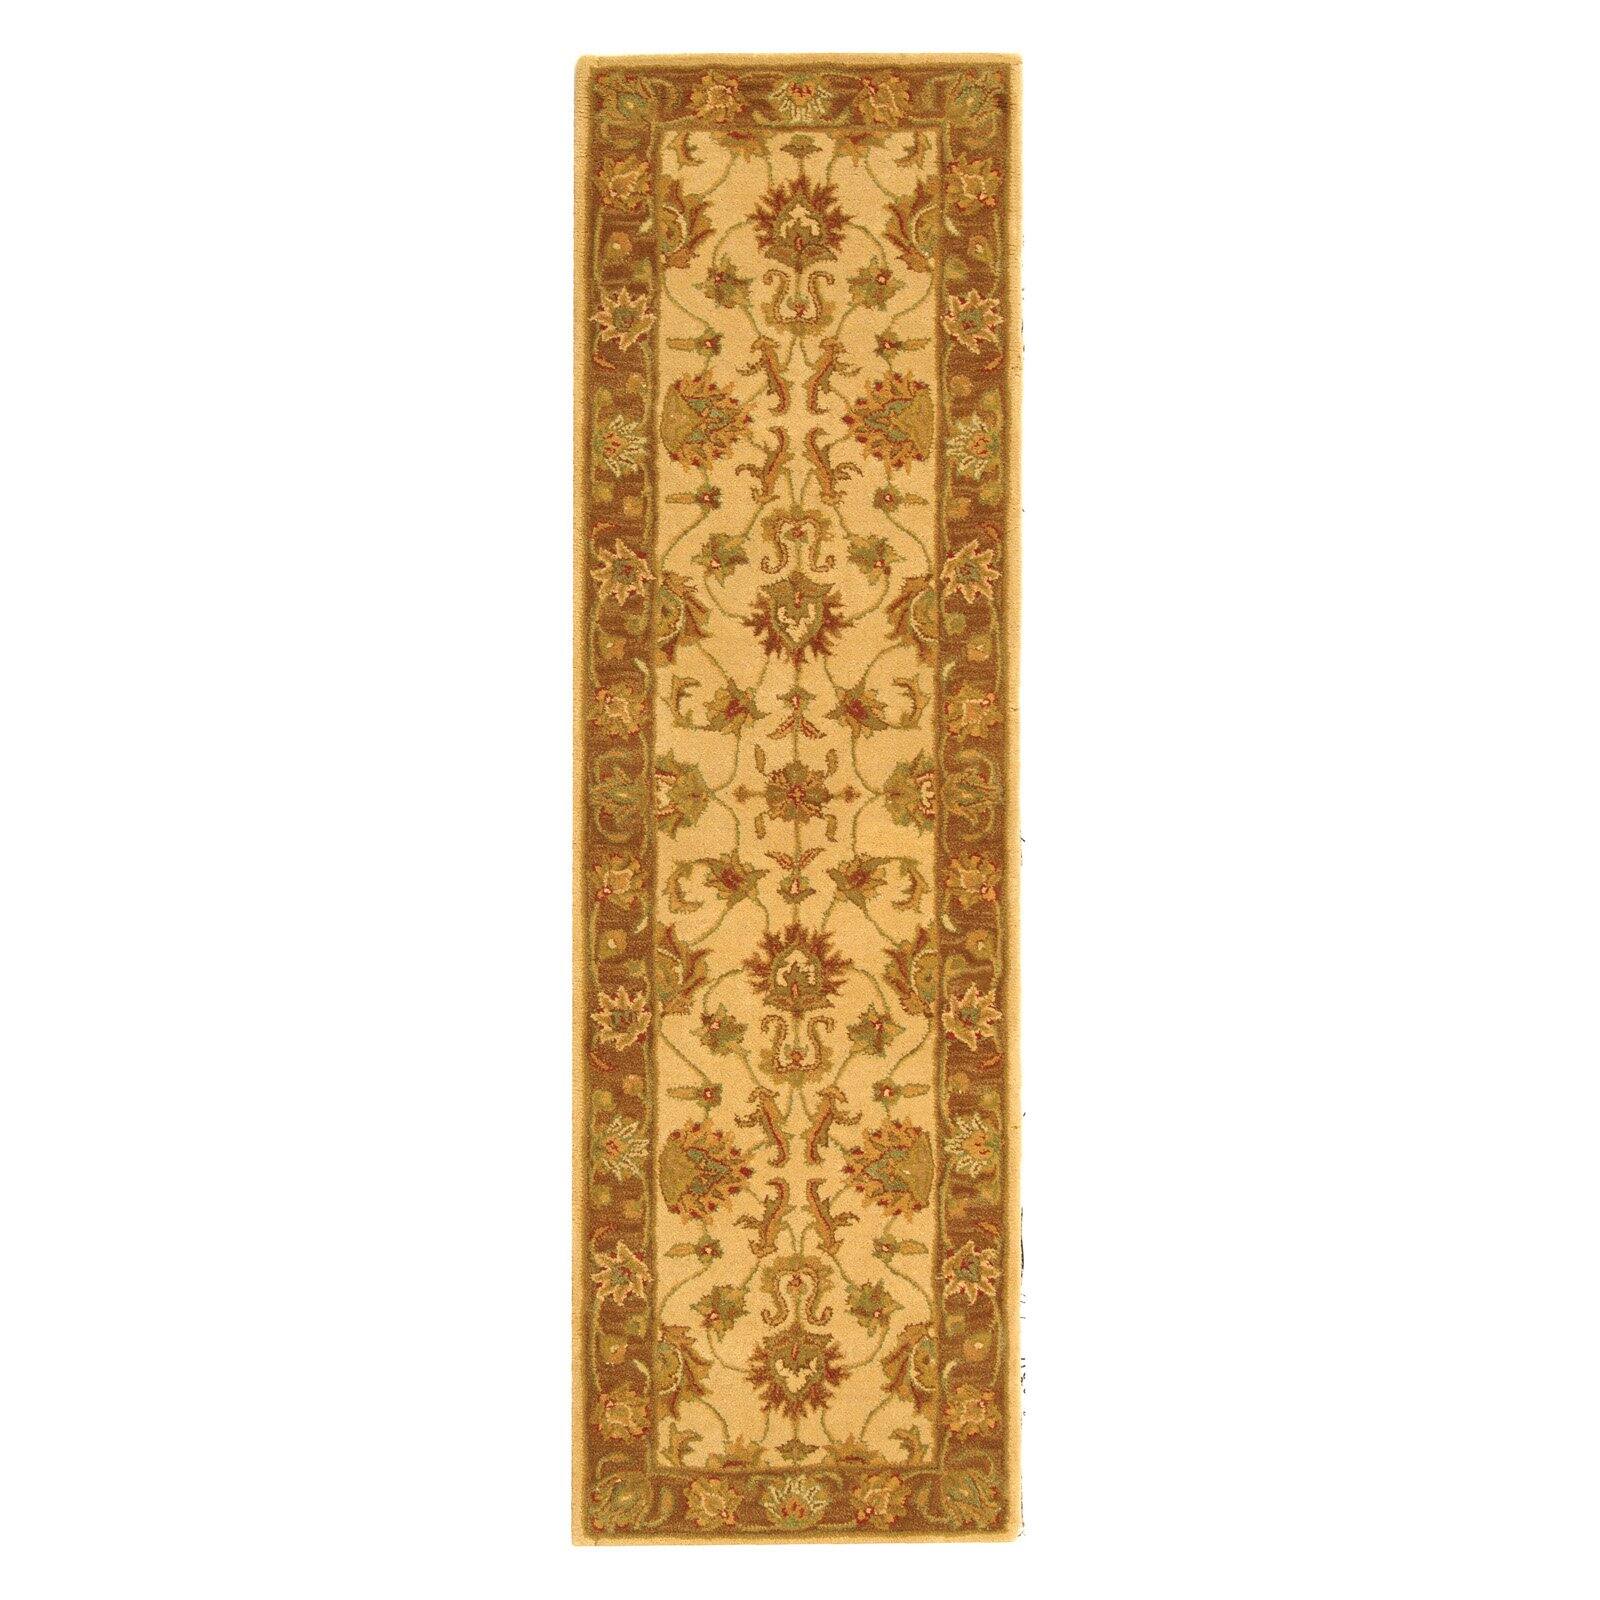 SAFAVIEH Heritage Regis Traditional Wool Area Rug, Ivory/Brown, 9'6" x 13'6" - image 4 of 9